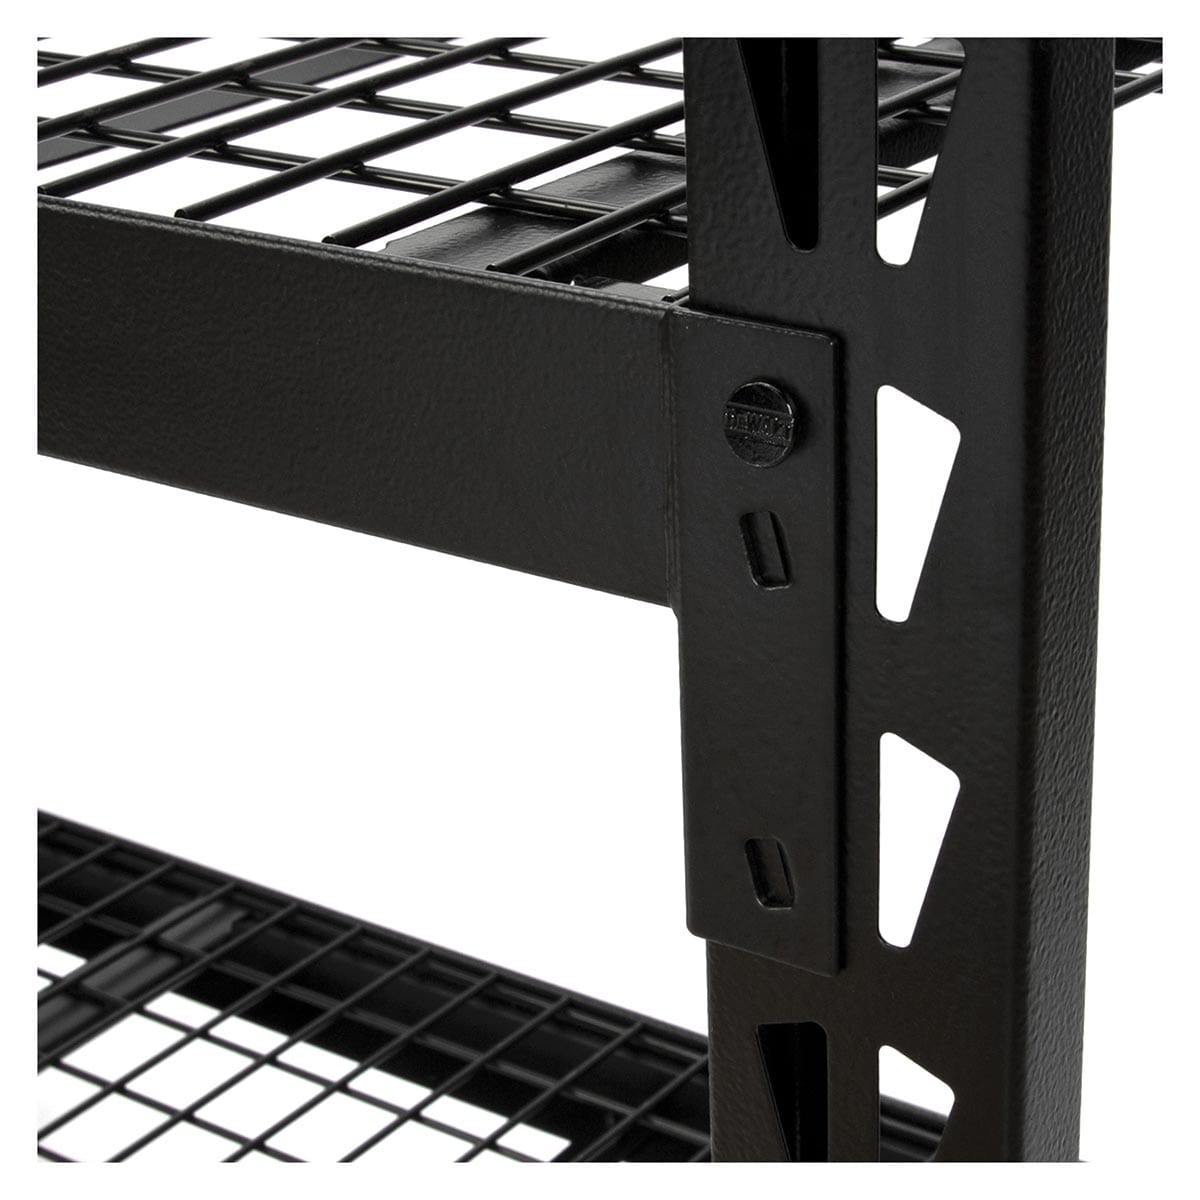 DEWALT 4-Foot Tall Black Frame 3 Shelf Steel Wire Deck Industrial Storage Rack